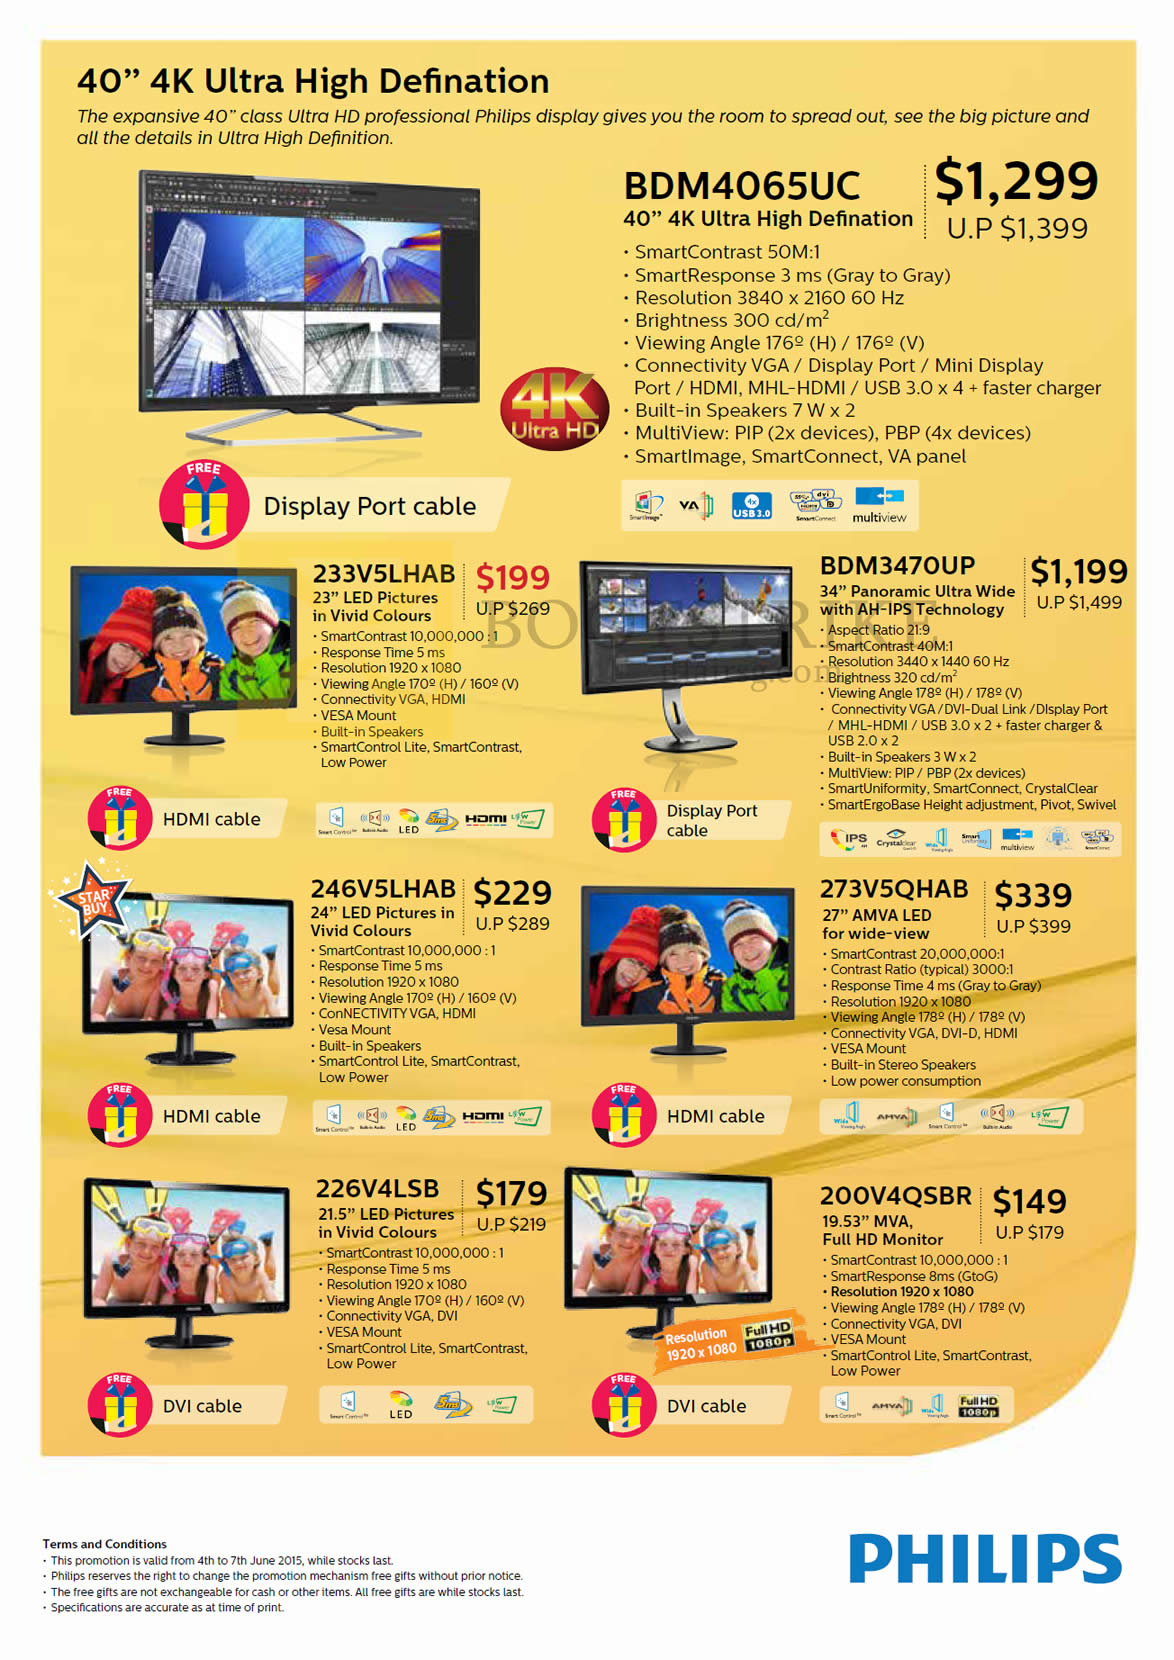 PC SHOW 2015 price list image brochure of Philips Monitors LED IPS, BDM4065UC, 233V5LHAB, BDM3470UP, 246V5LHAB, 273V5QHAB, 226V4LSB, 200V4QSBR